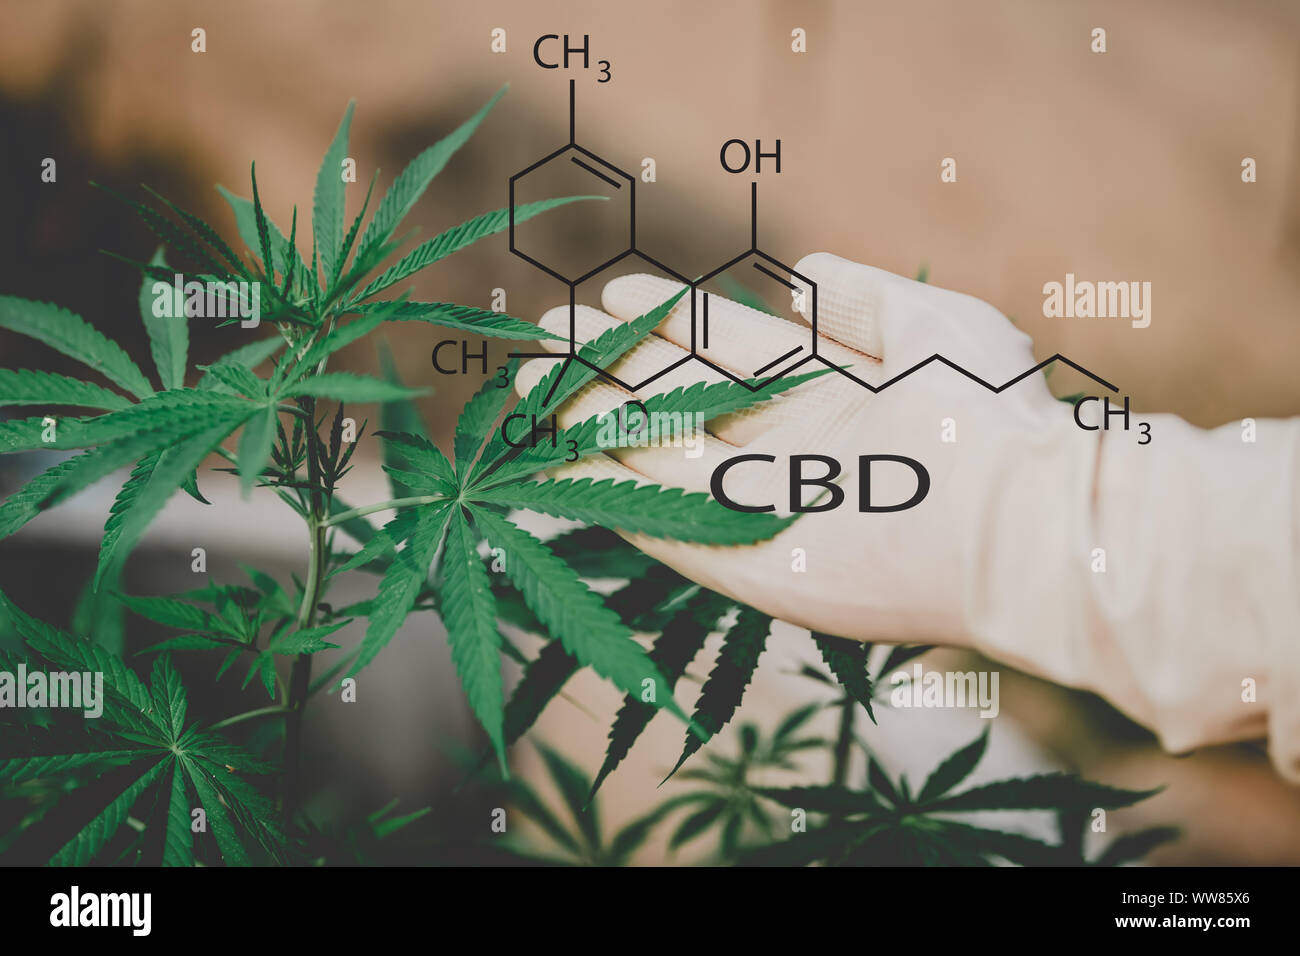 CBD Structural Formula, Cannabis Industry, Growing Marijuana, Ph Stock Photo